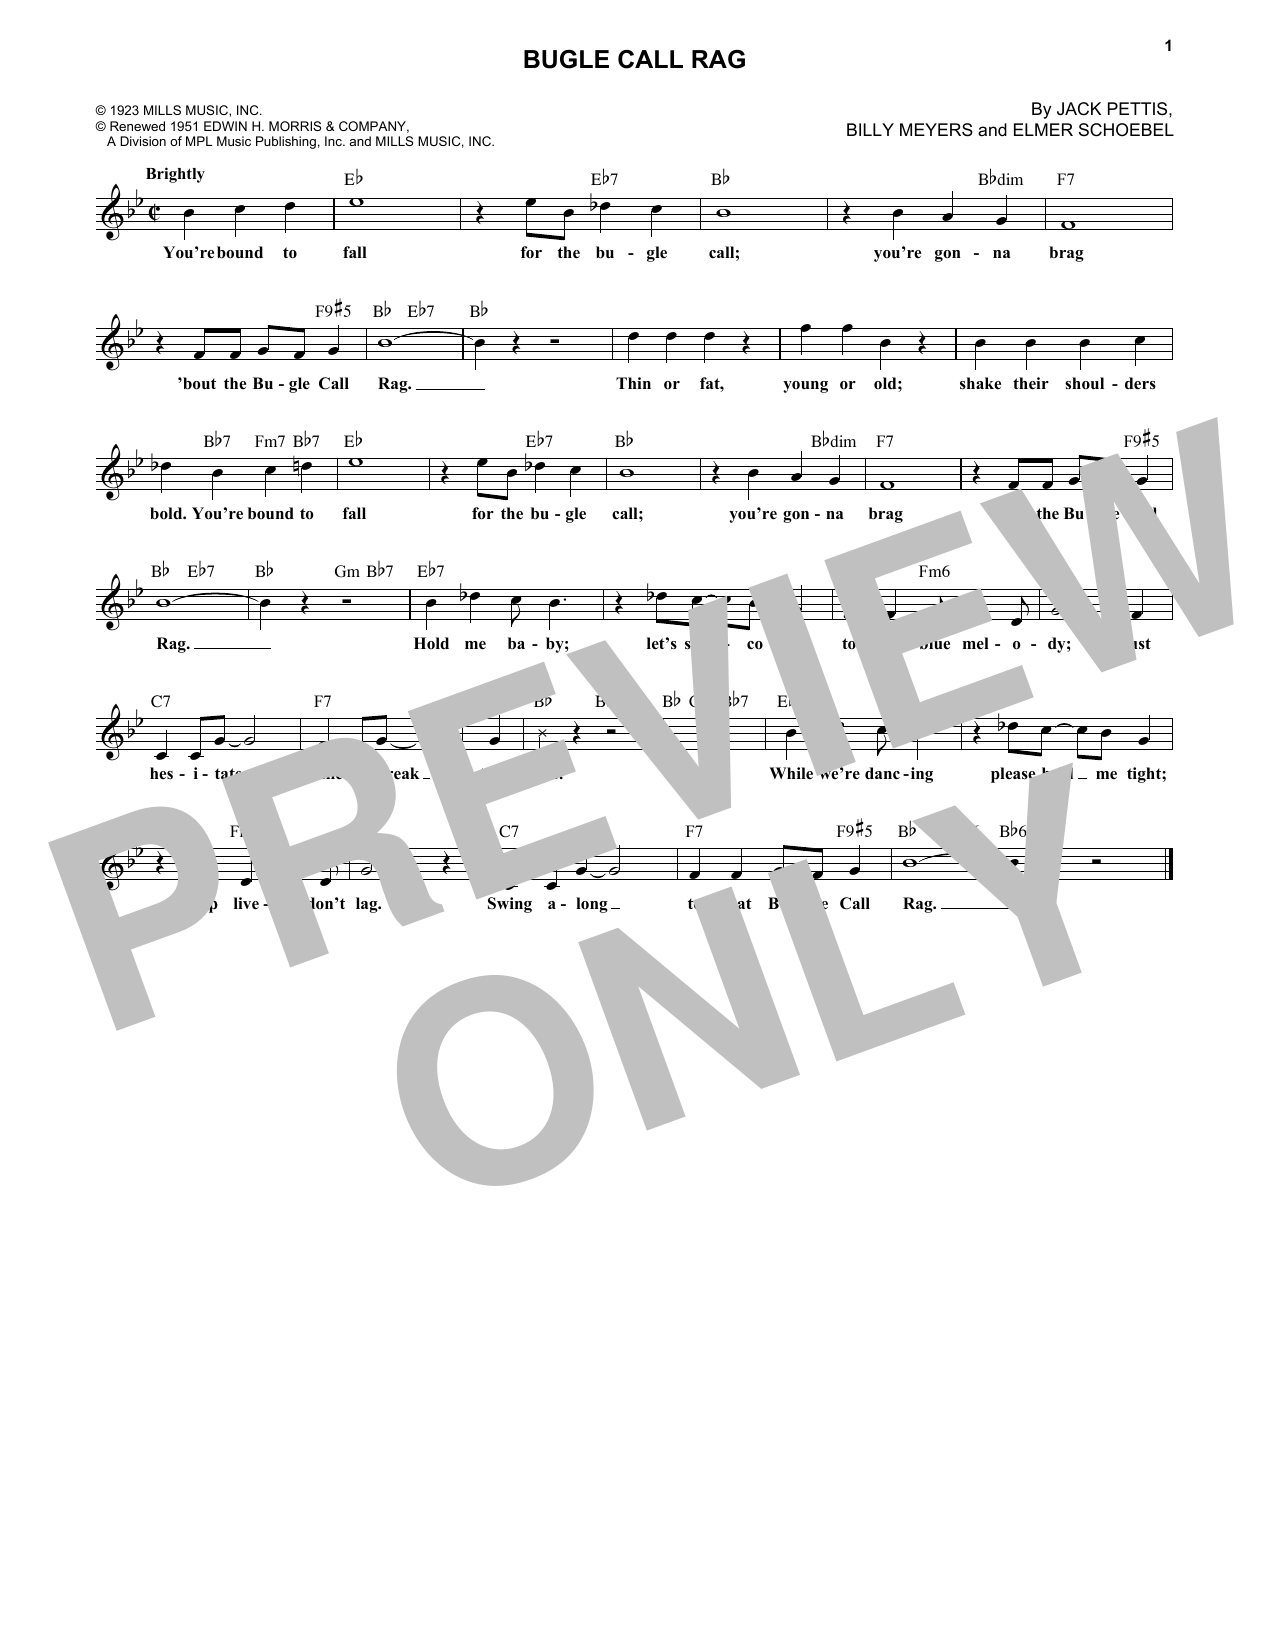 Elmer Schoebel Bugle Call Rag Sheet Music Notes & Chords for Melody Line, Lyrics & Chords - Download or Print PDF